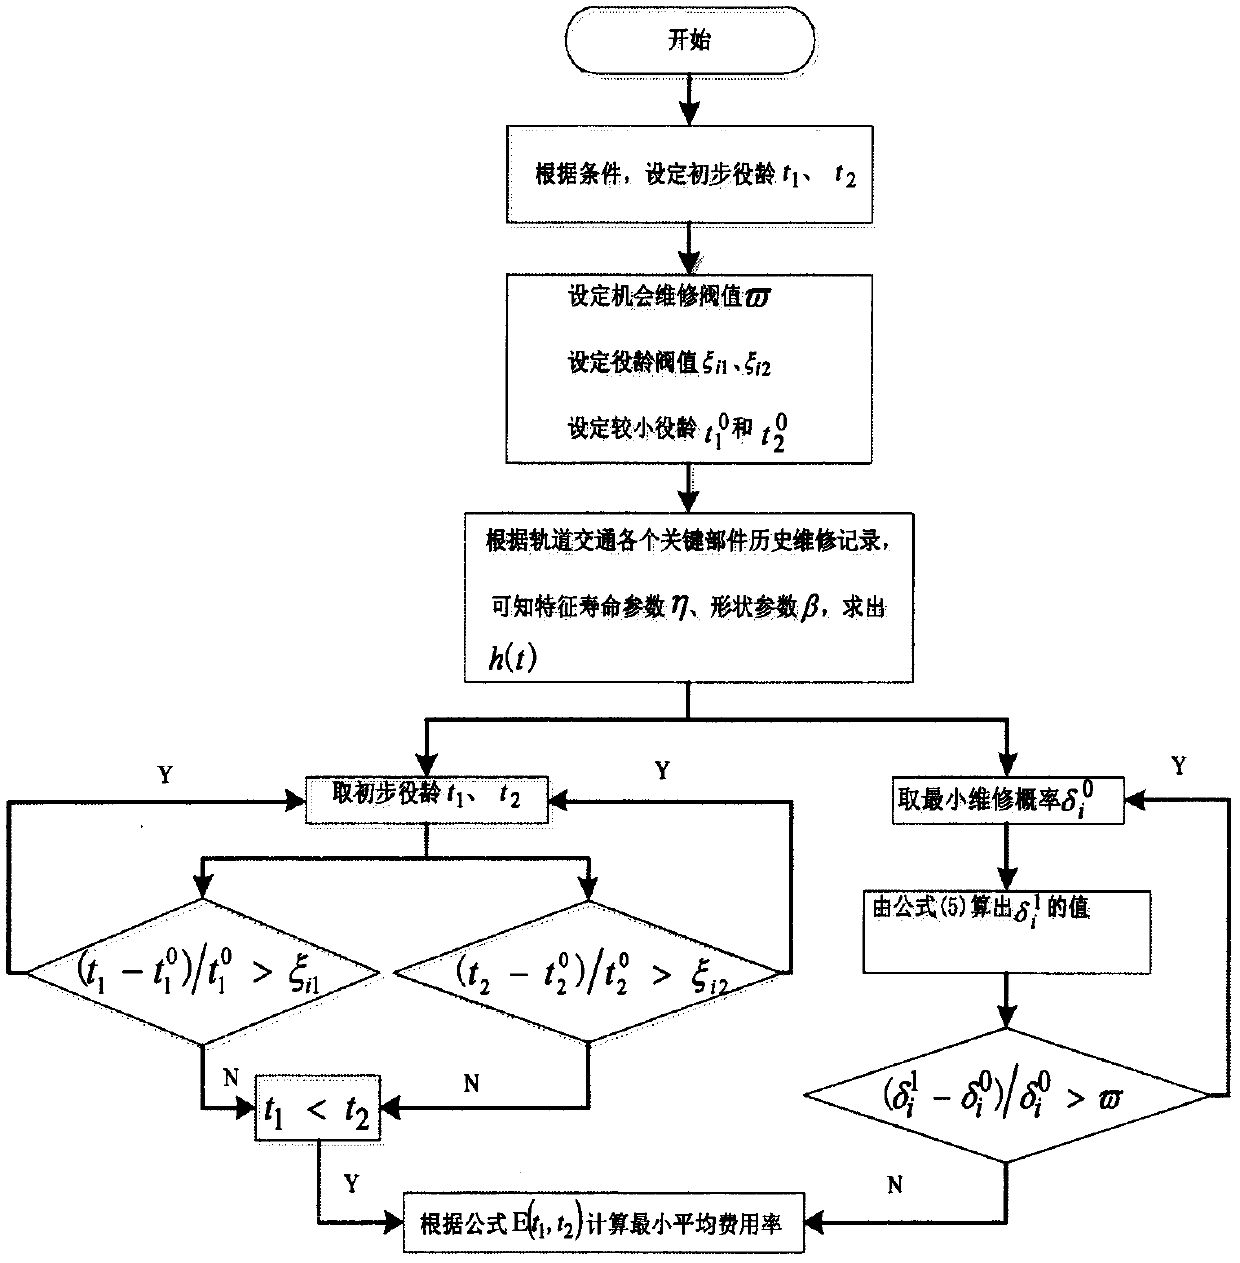 Preventive maintenance decision-making optimization model for key components of train bogie based on maximum and minimum ant colony algorithms